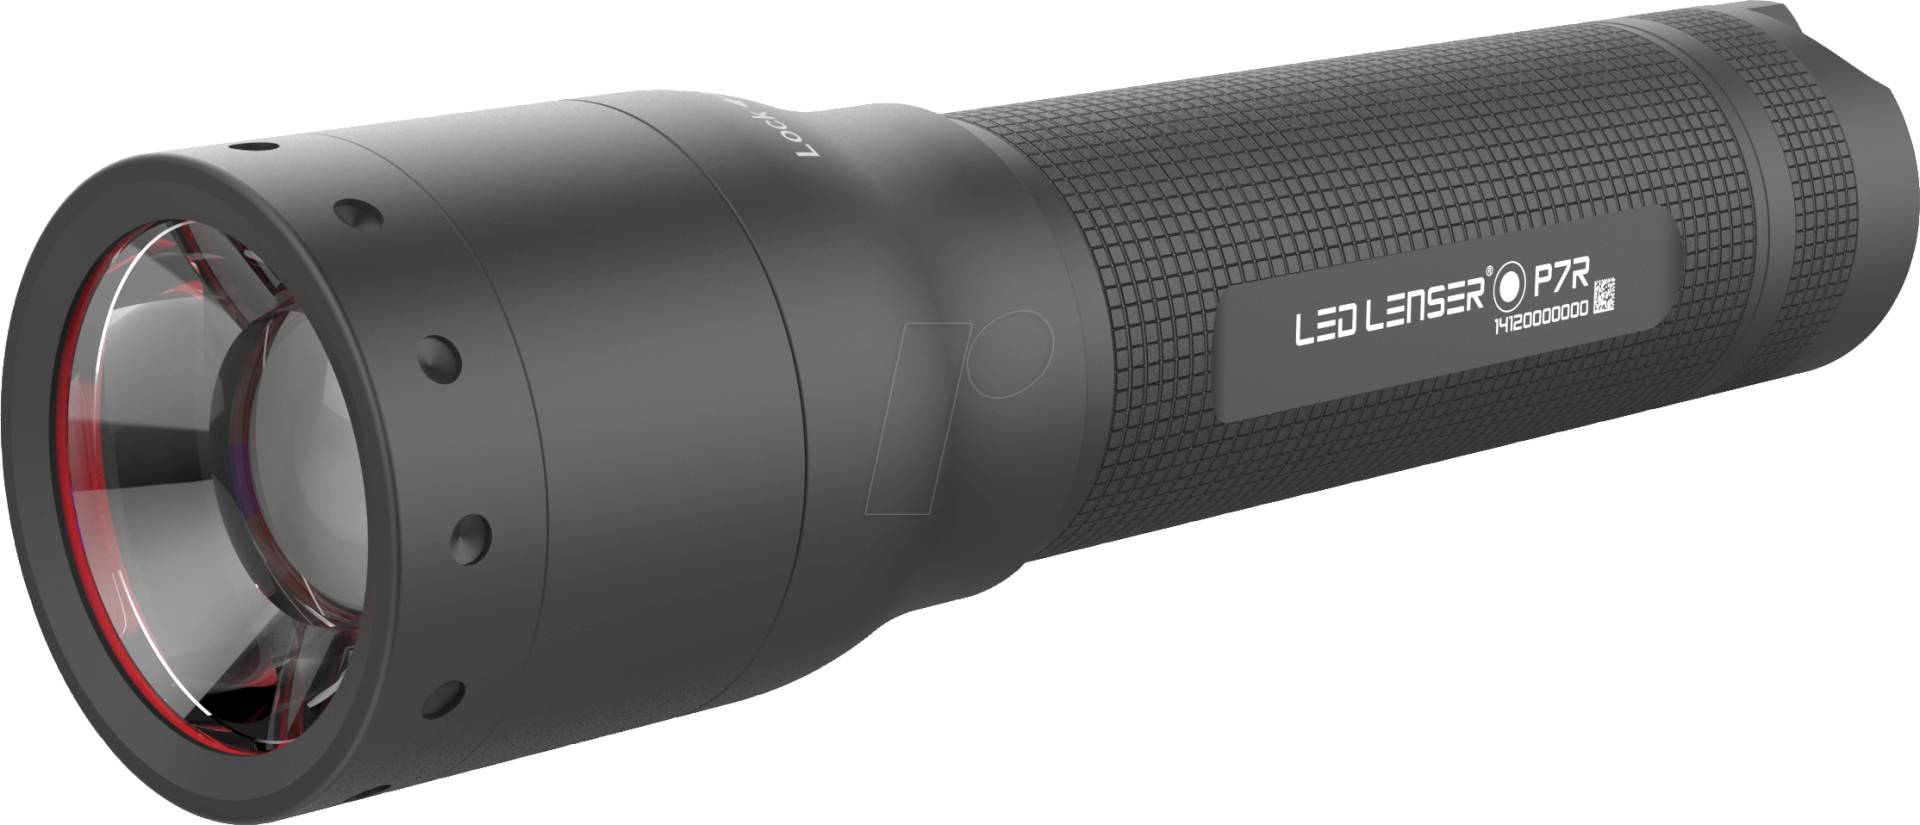 LED LENSER P7R - LED-Taschenlampe P7R, 1000 lm, schwarz, Li-Ion-Akku von LEDLENSER